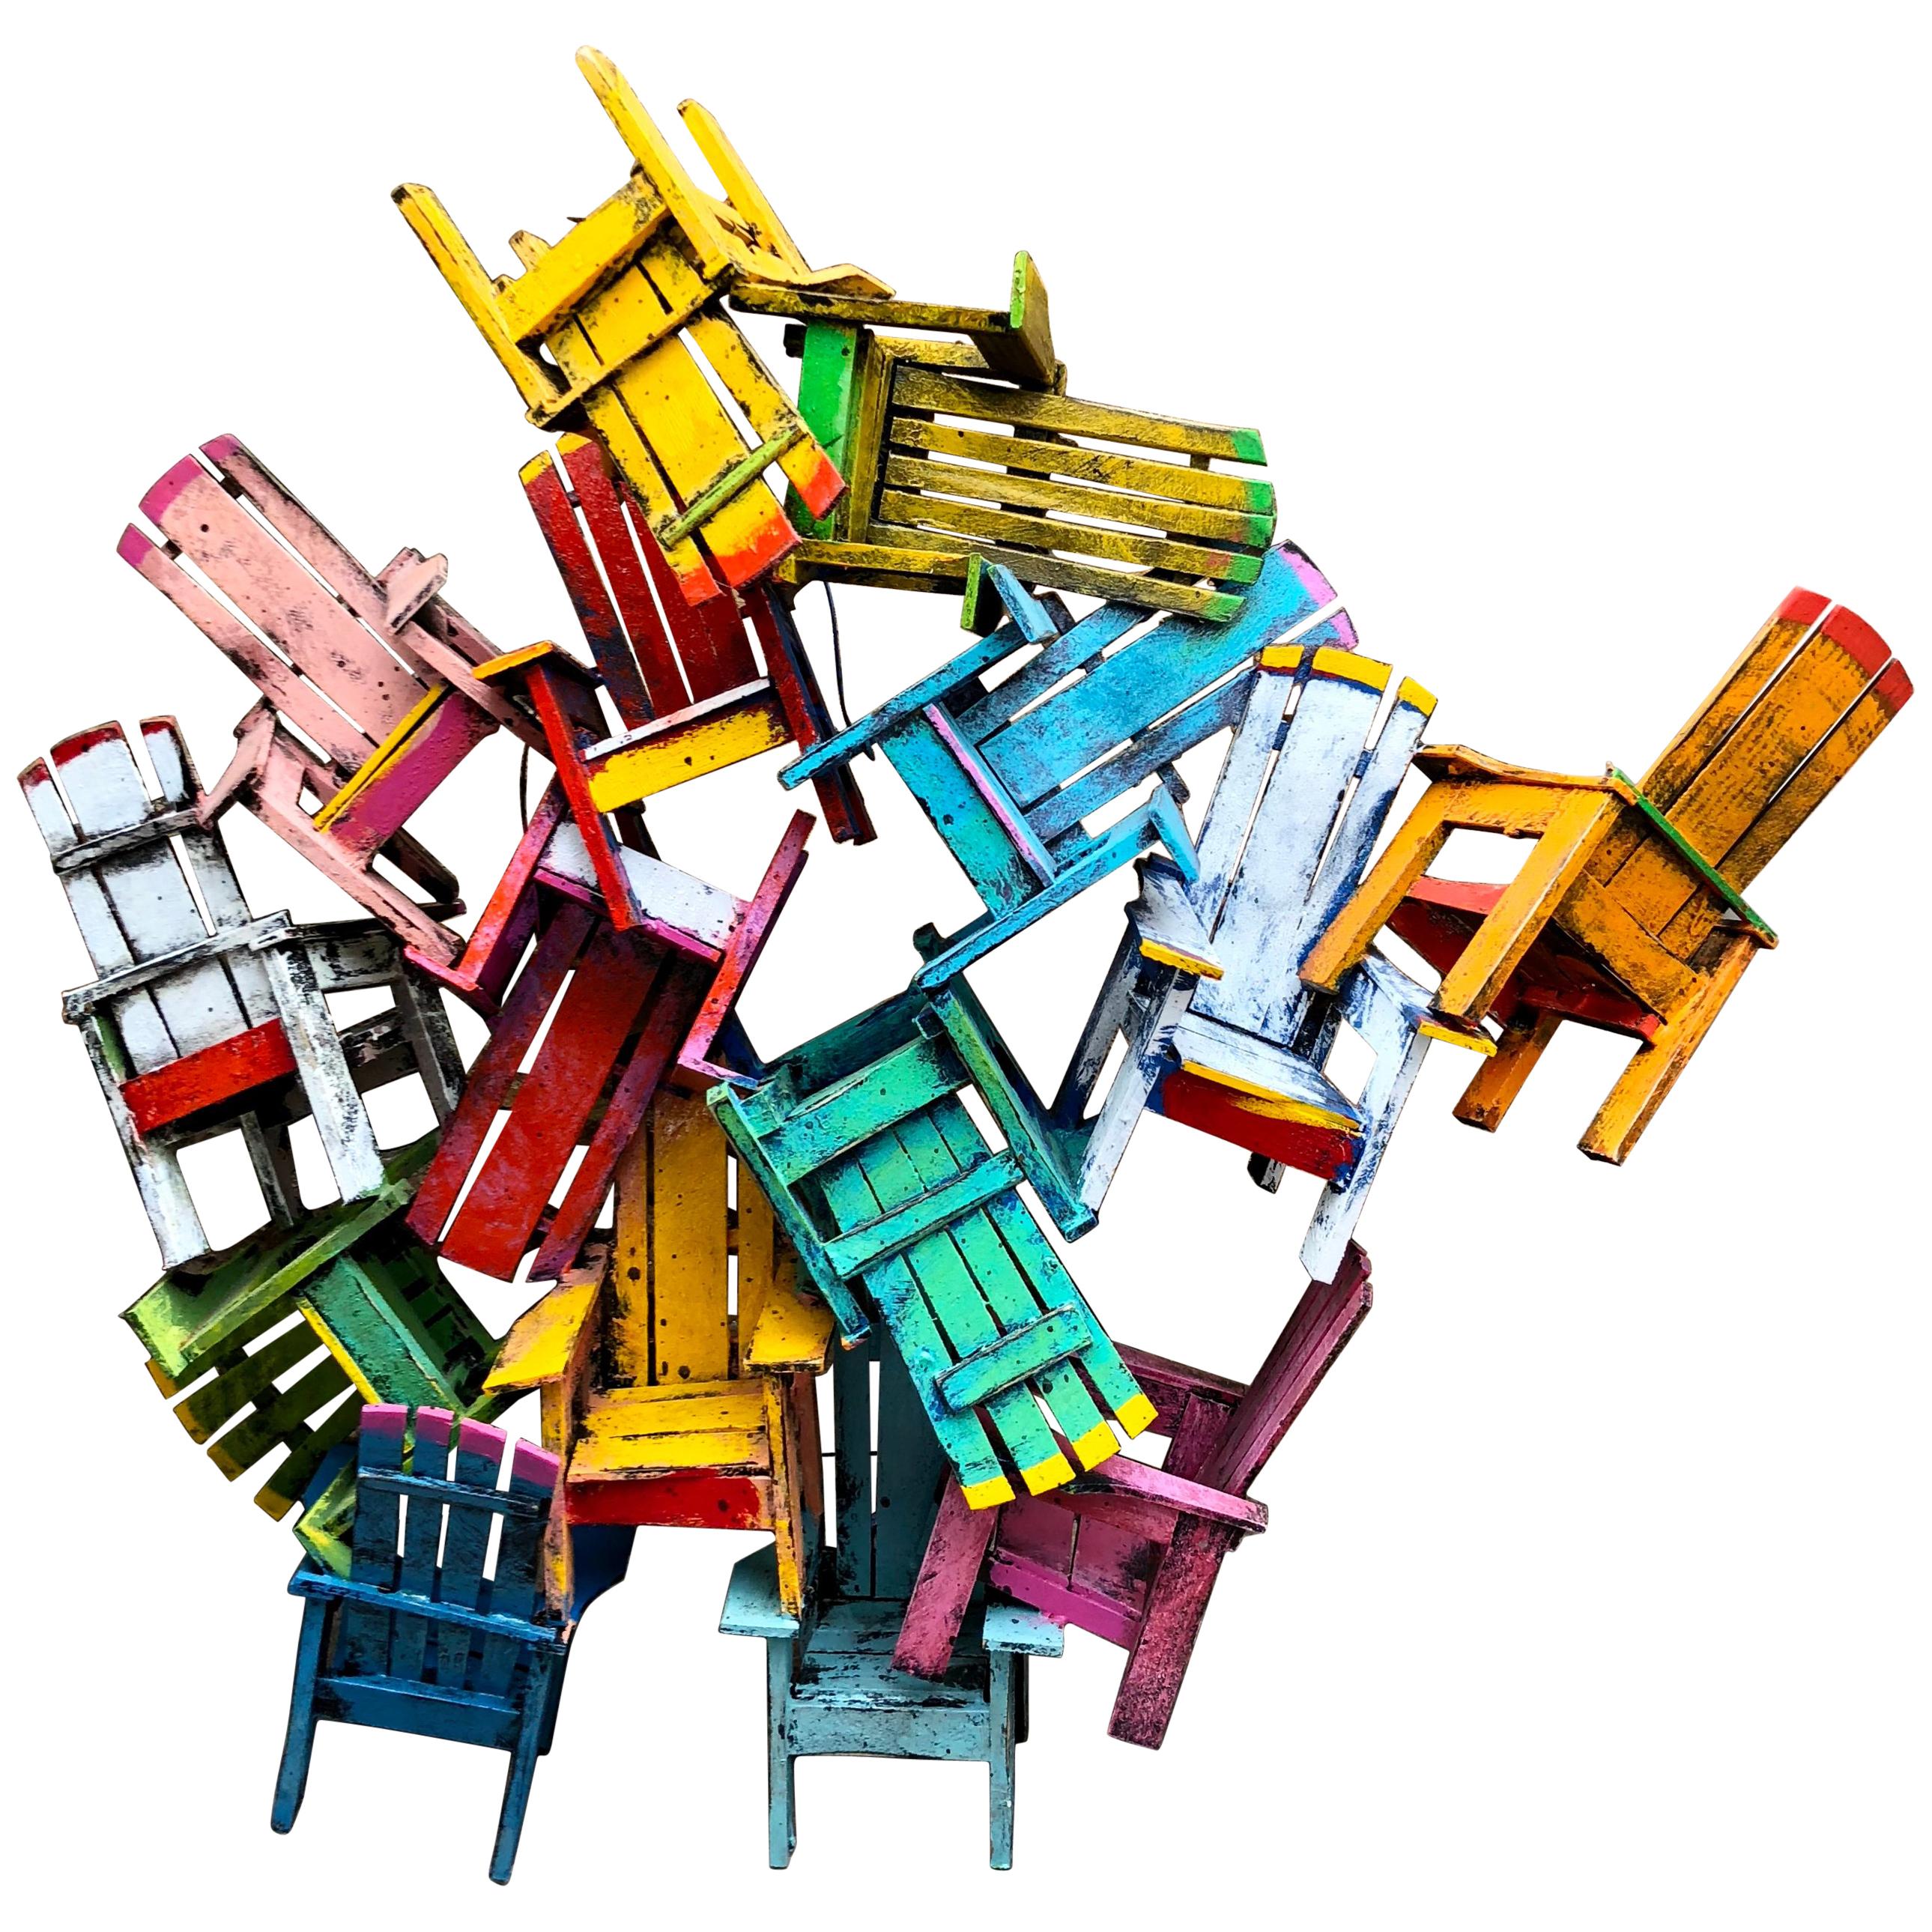 Chair Jumble Sculpture by Paul Jacobsen